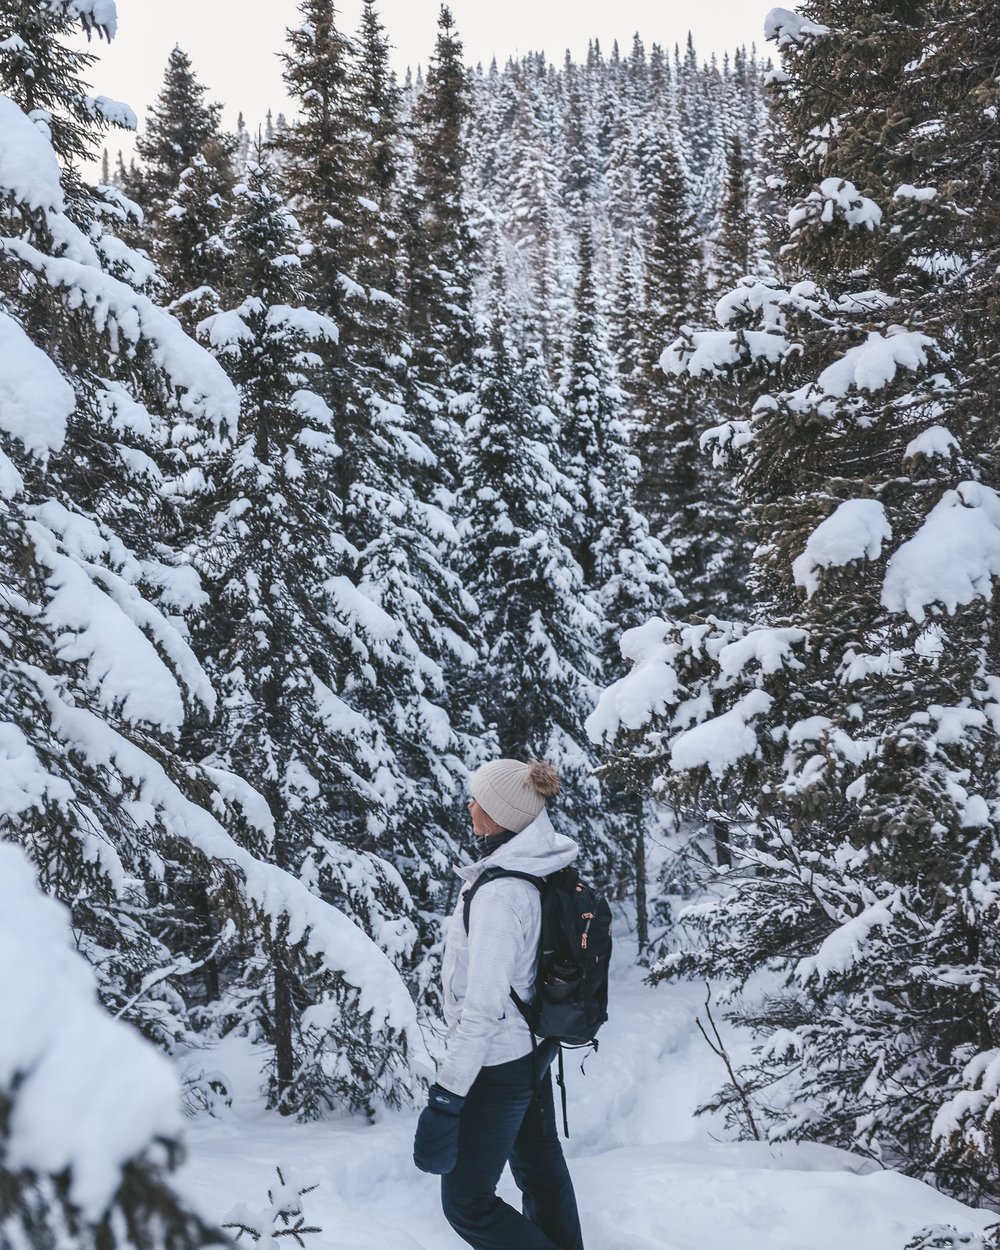 Enjoying walking in the forest in winter - Mount du Dôme - Charlevoix - Quebec - Canada